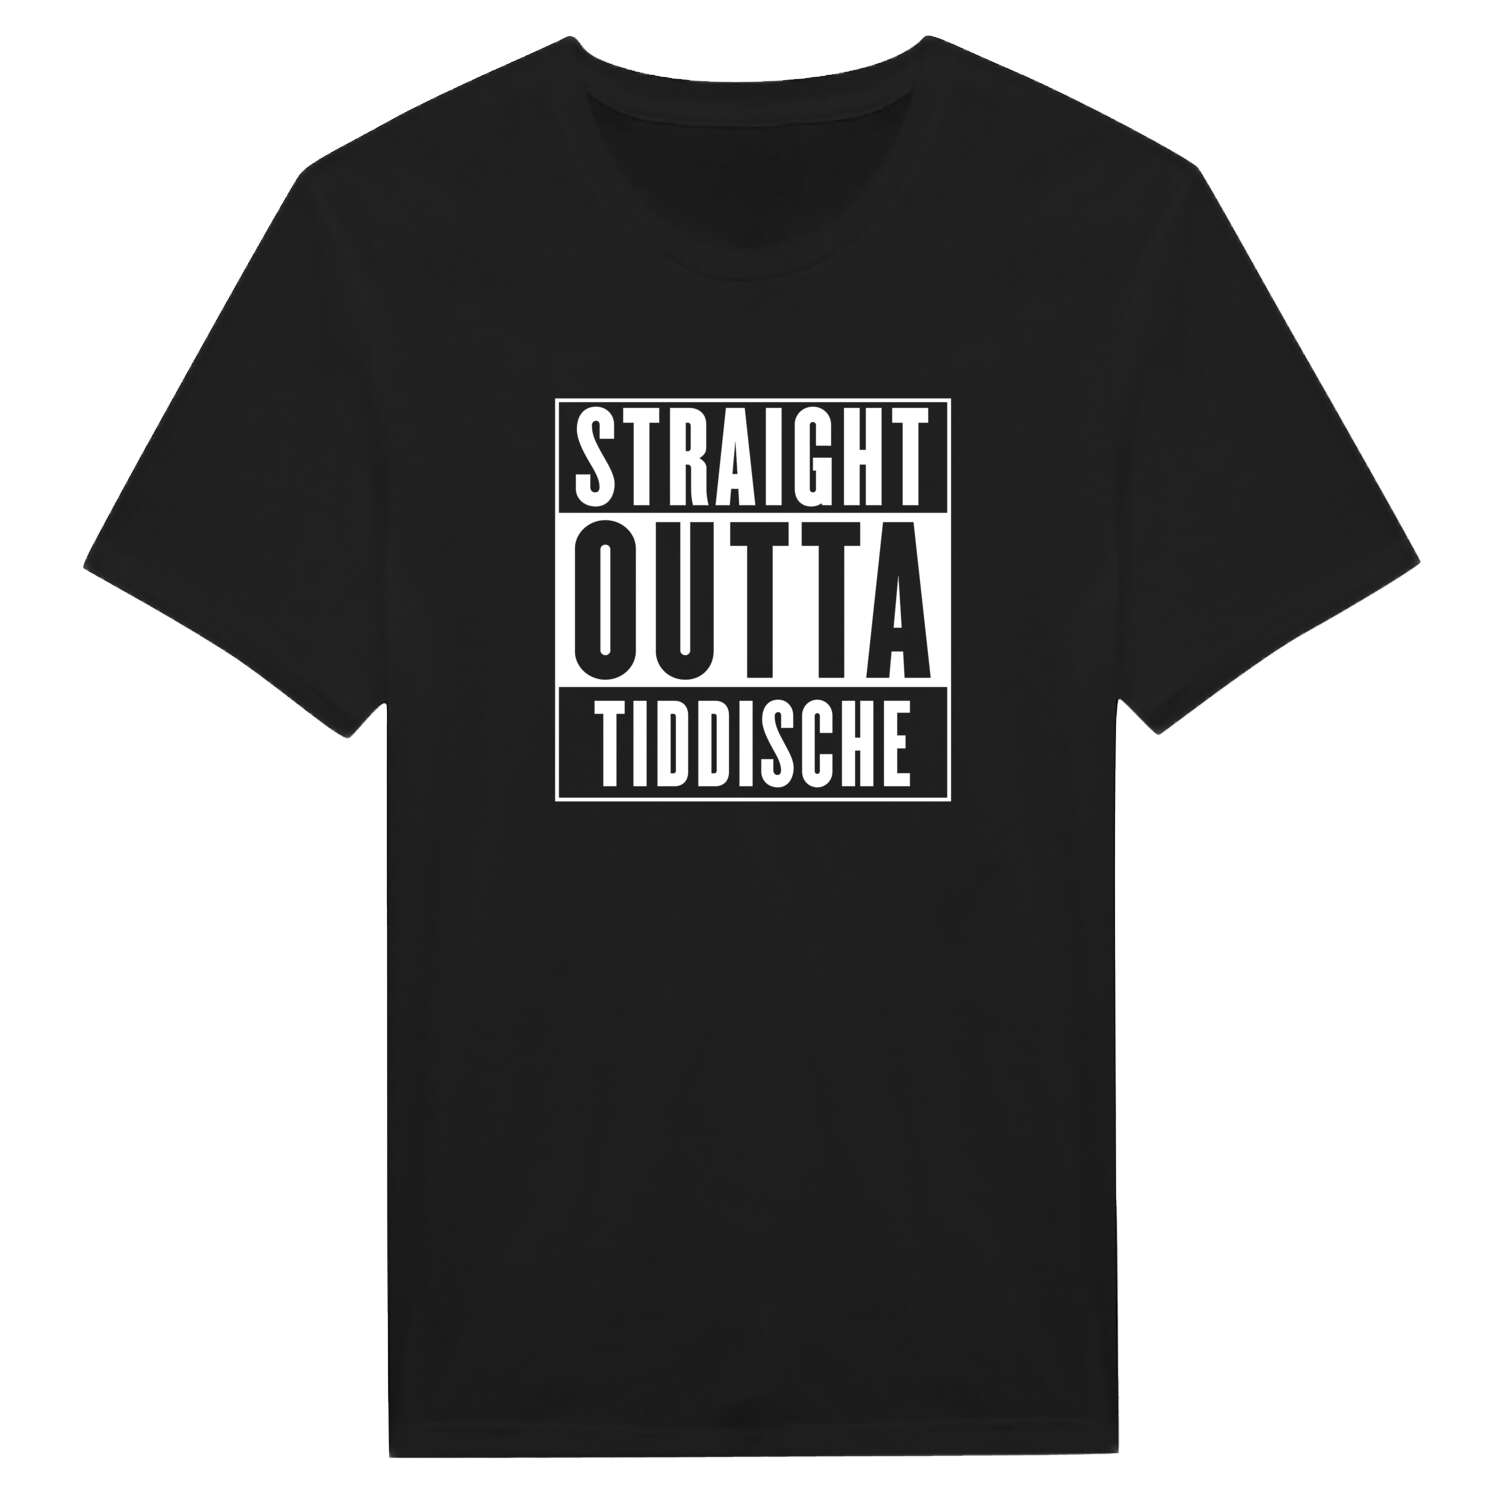 Tiddische T-Shirt »Straight Outta«